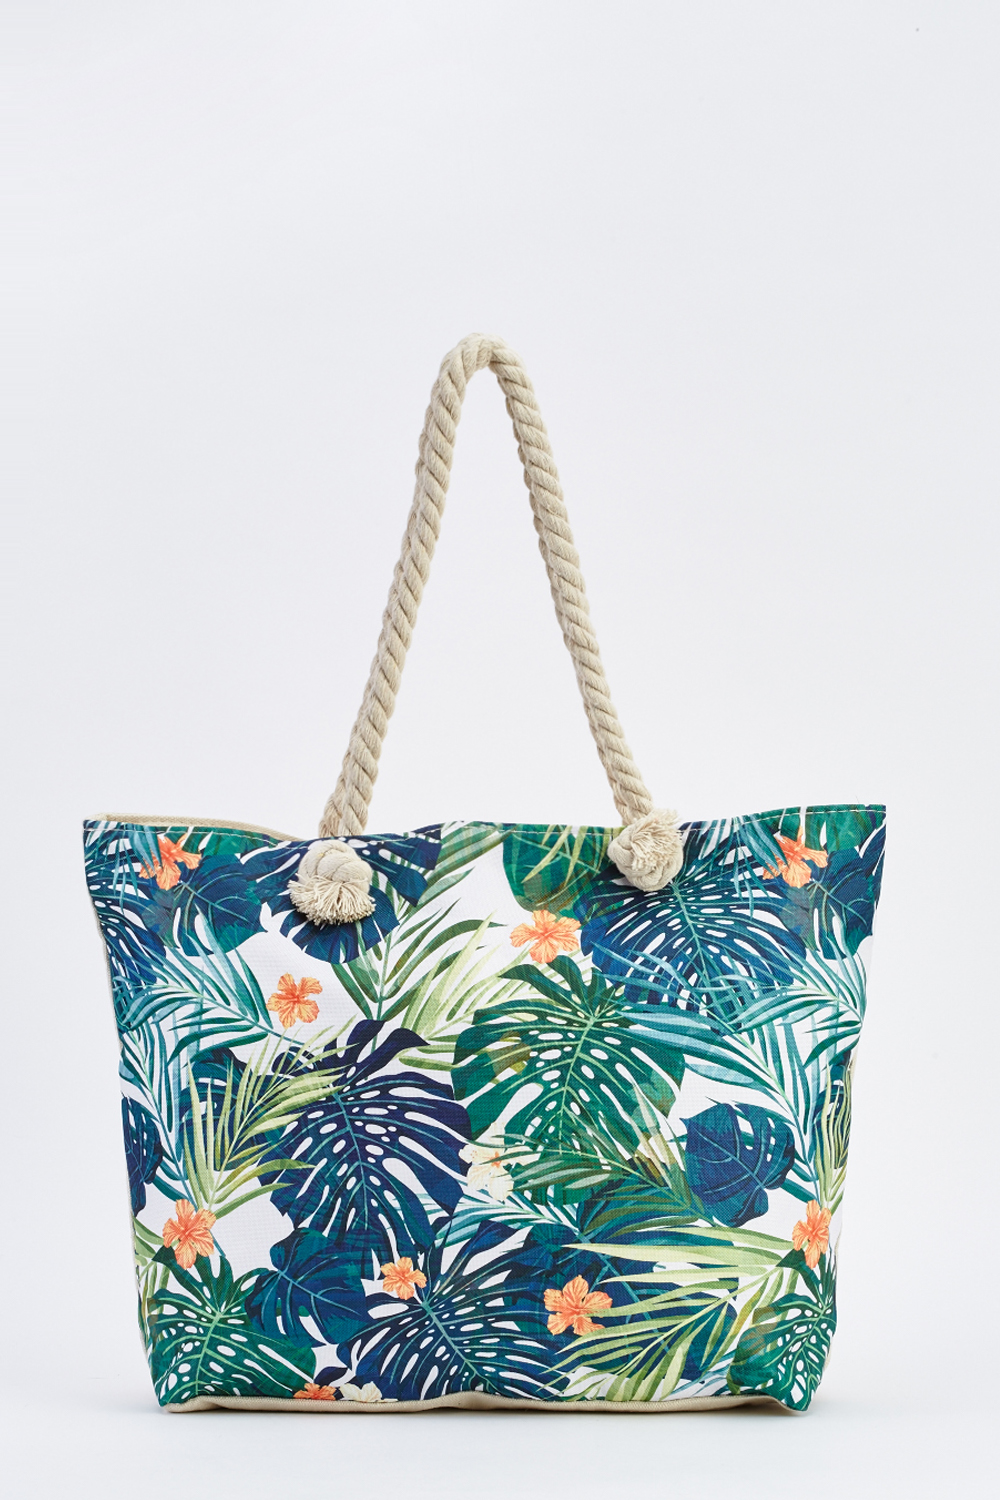 Tropical Print Jute Beach Bag - Just $7